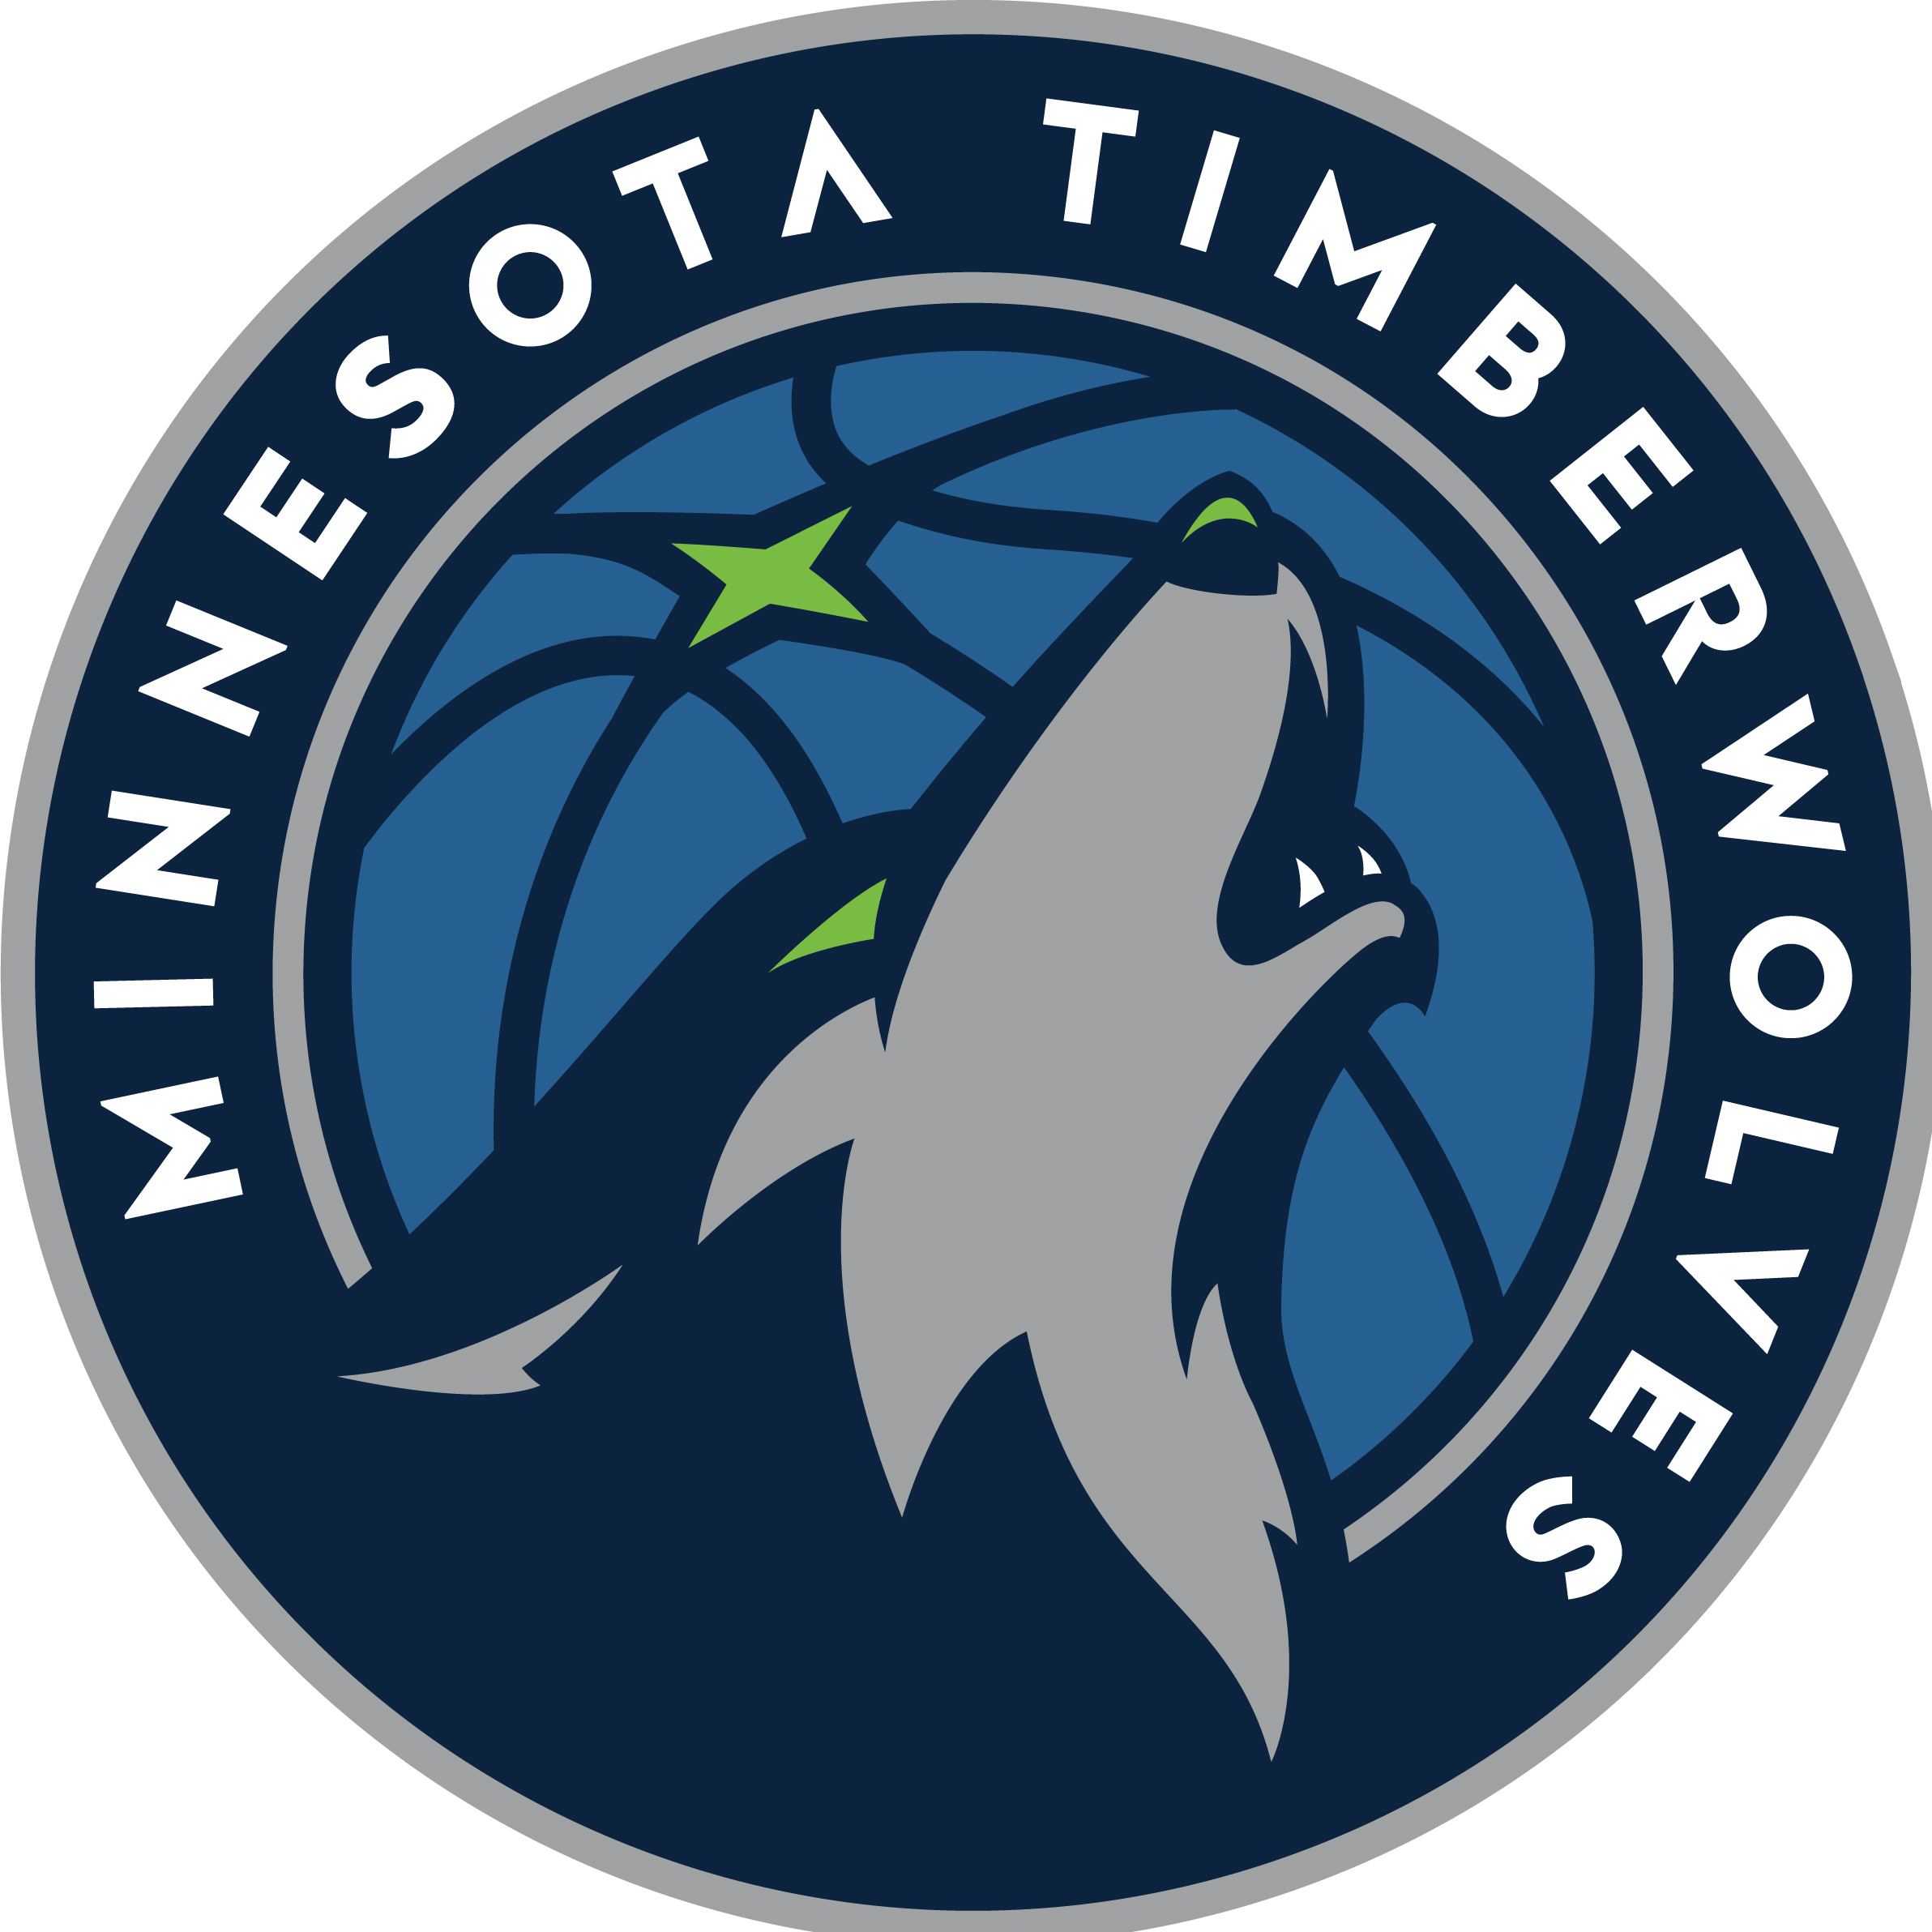 Utah Jazz vs Minnesota Timberwolves Live Stream Link 2